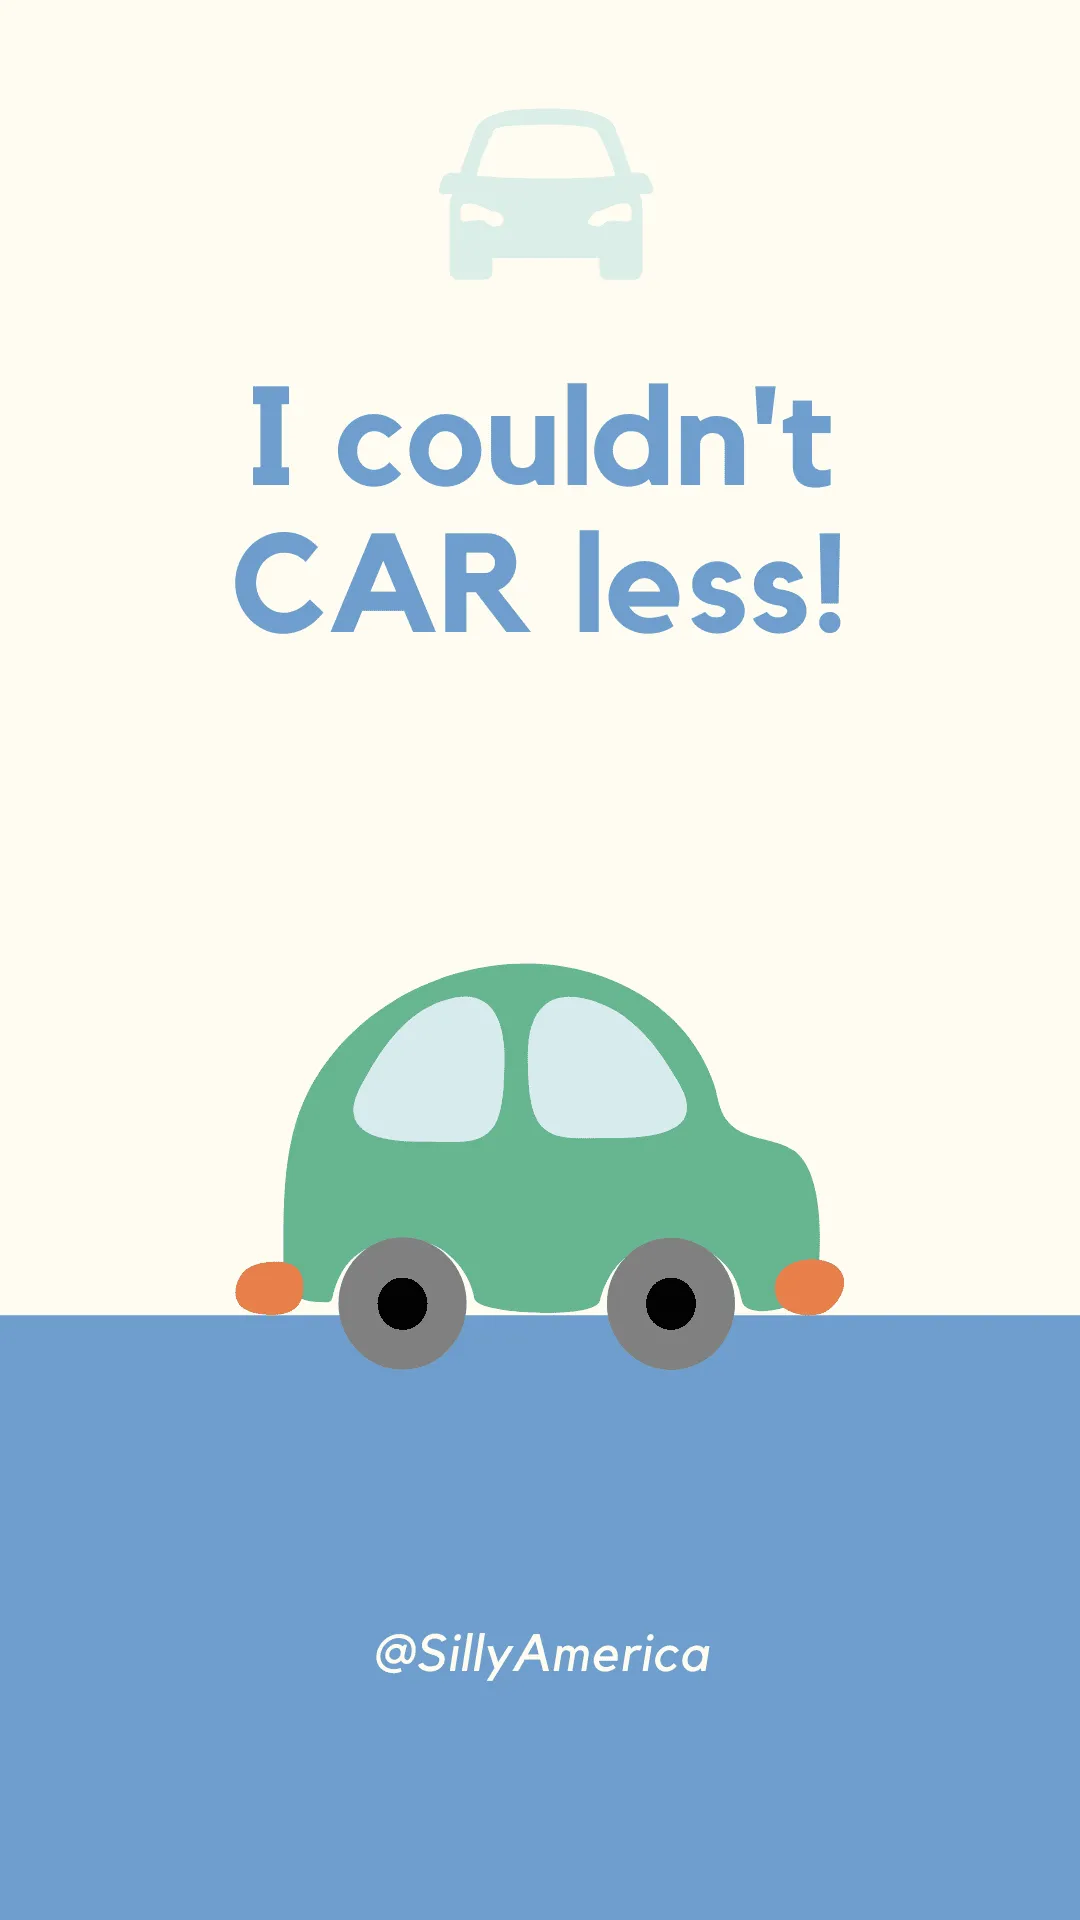 I couldn't CAR less! - Car Puns to fuel your road trip content!